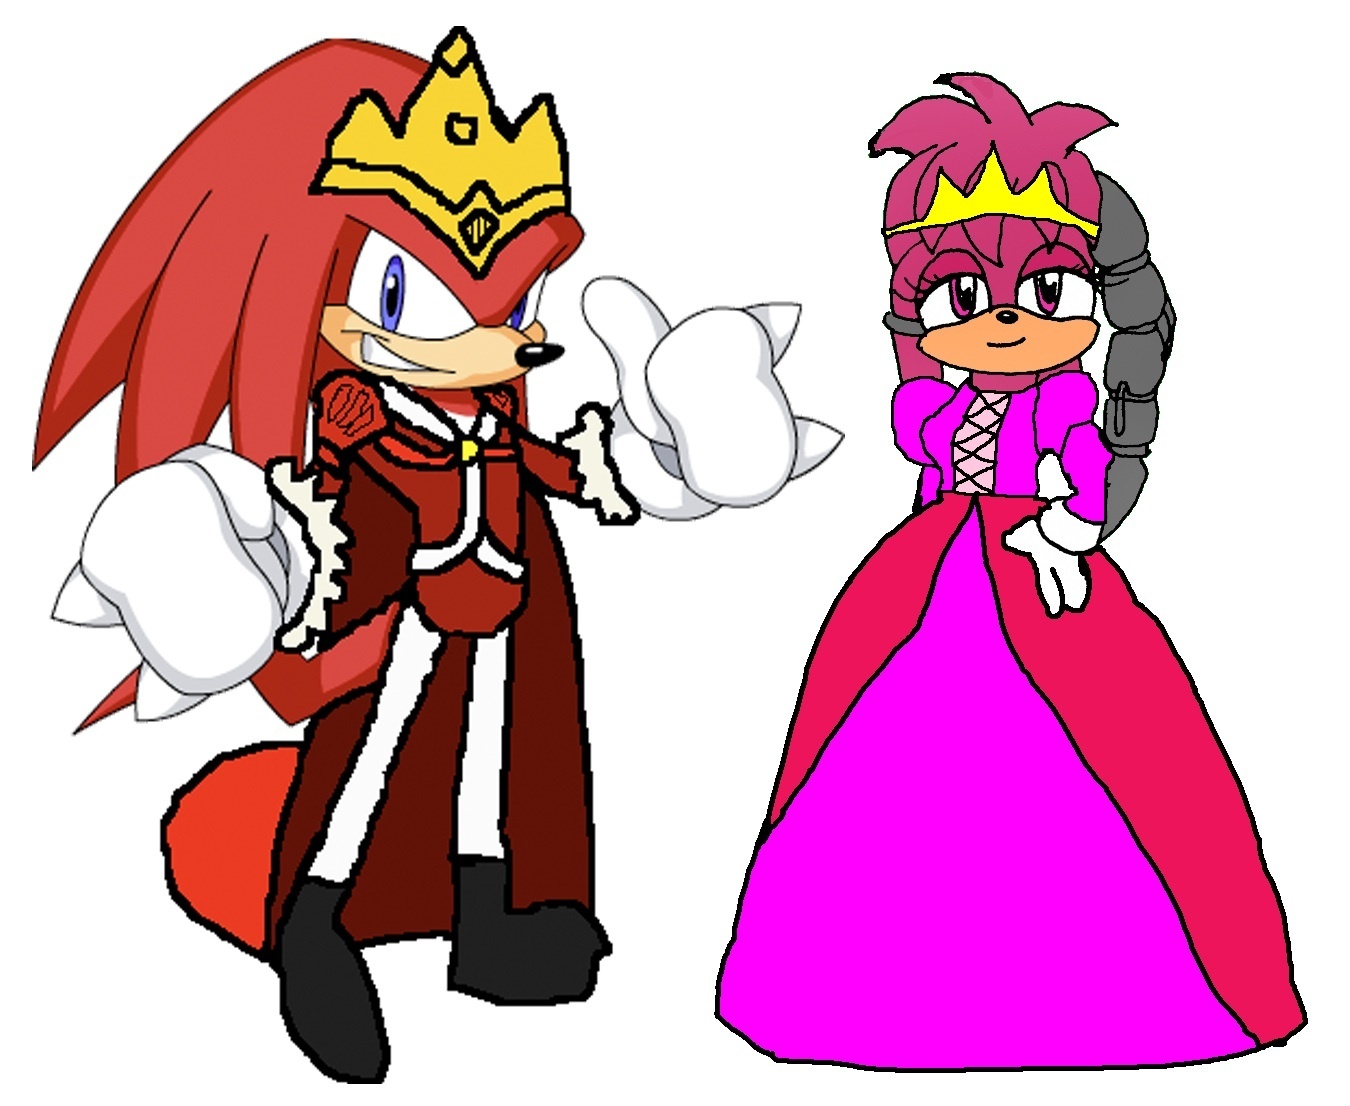 Sonic the Hedgehog Fan Art: King Knuckles and Queen Julie-Su.